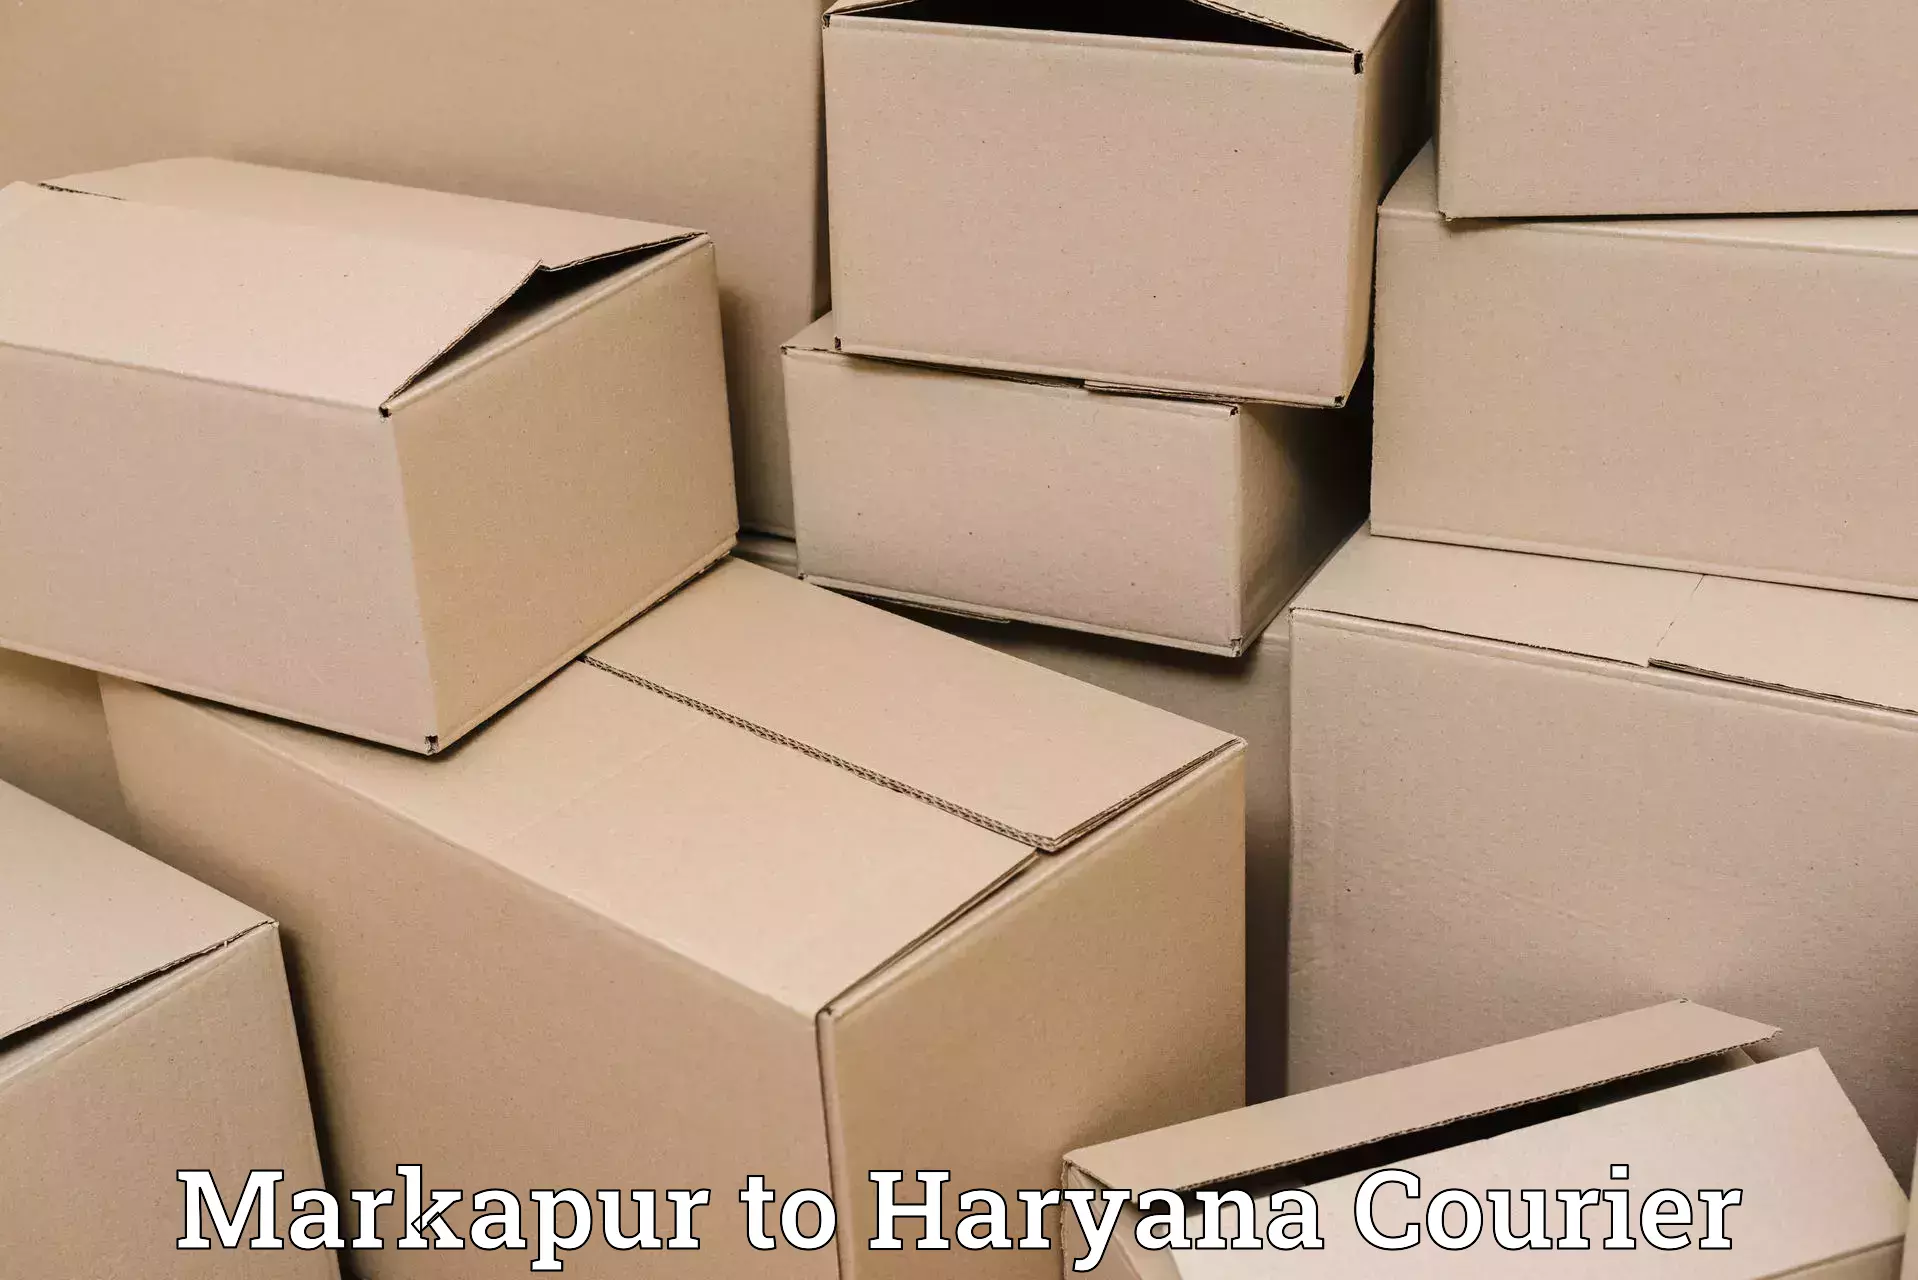 Efficient freight service Markapur to Gurgaon